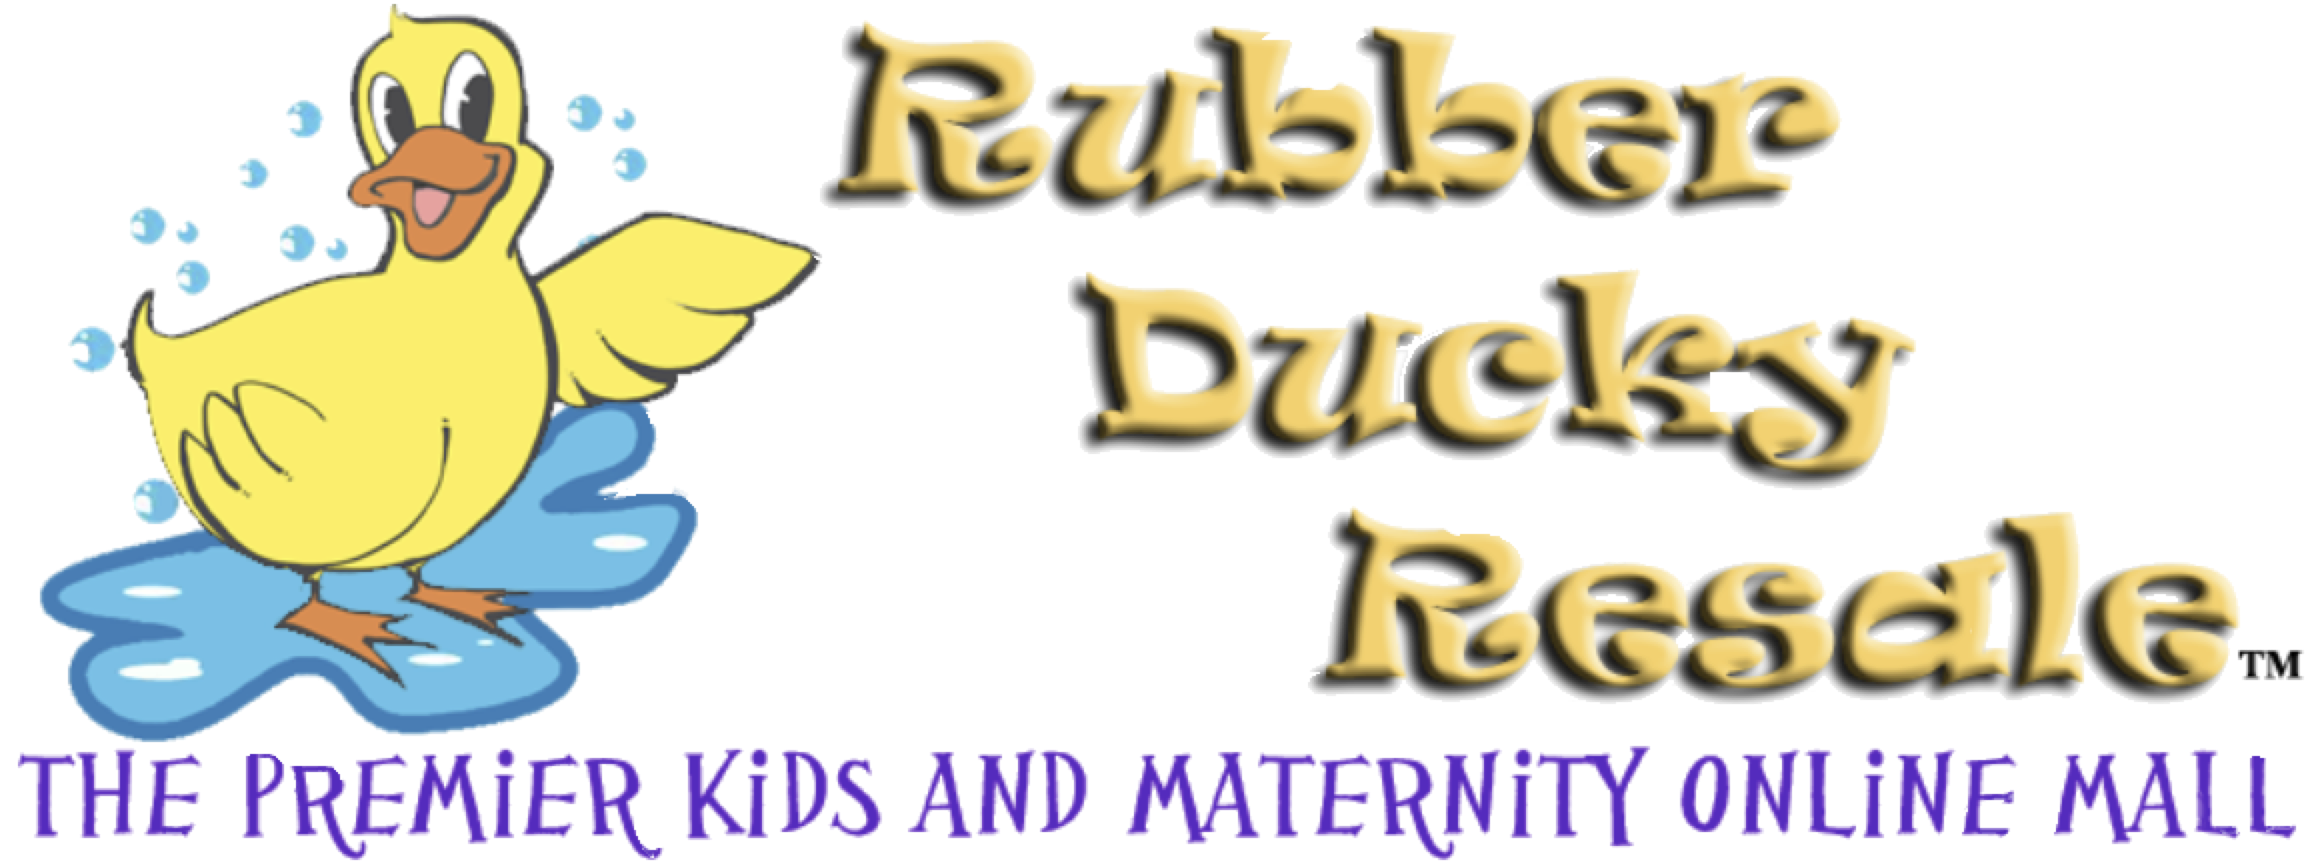 Rubber ducky resale LLC